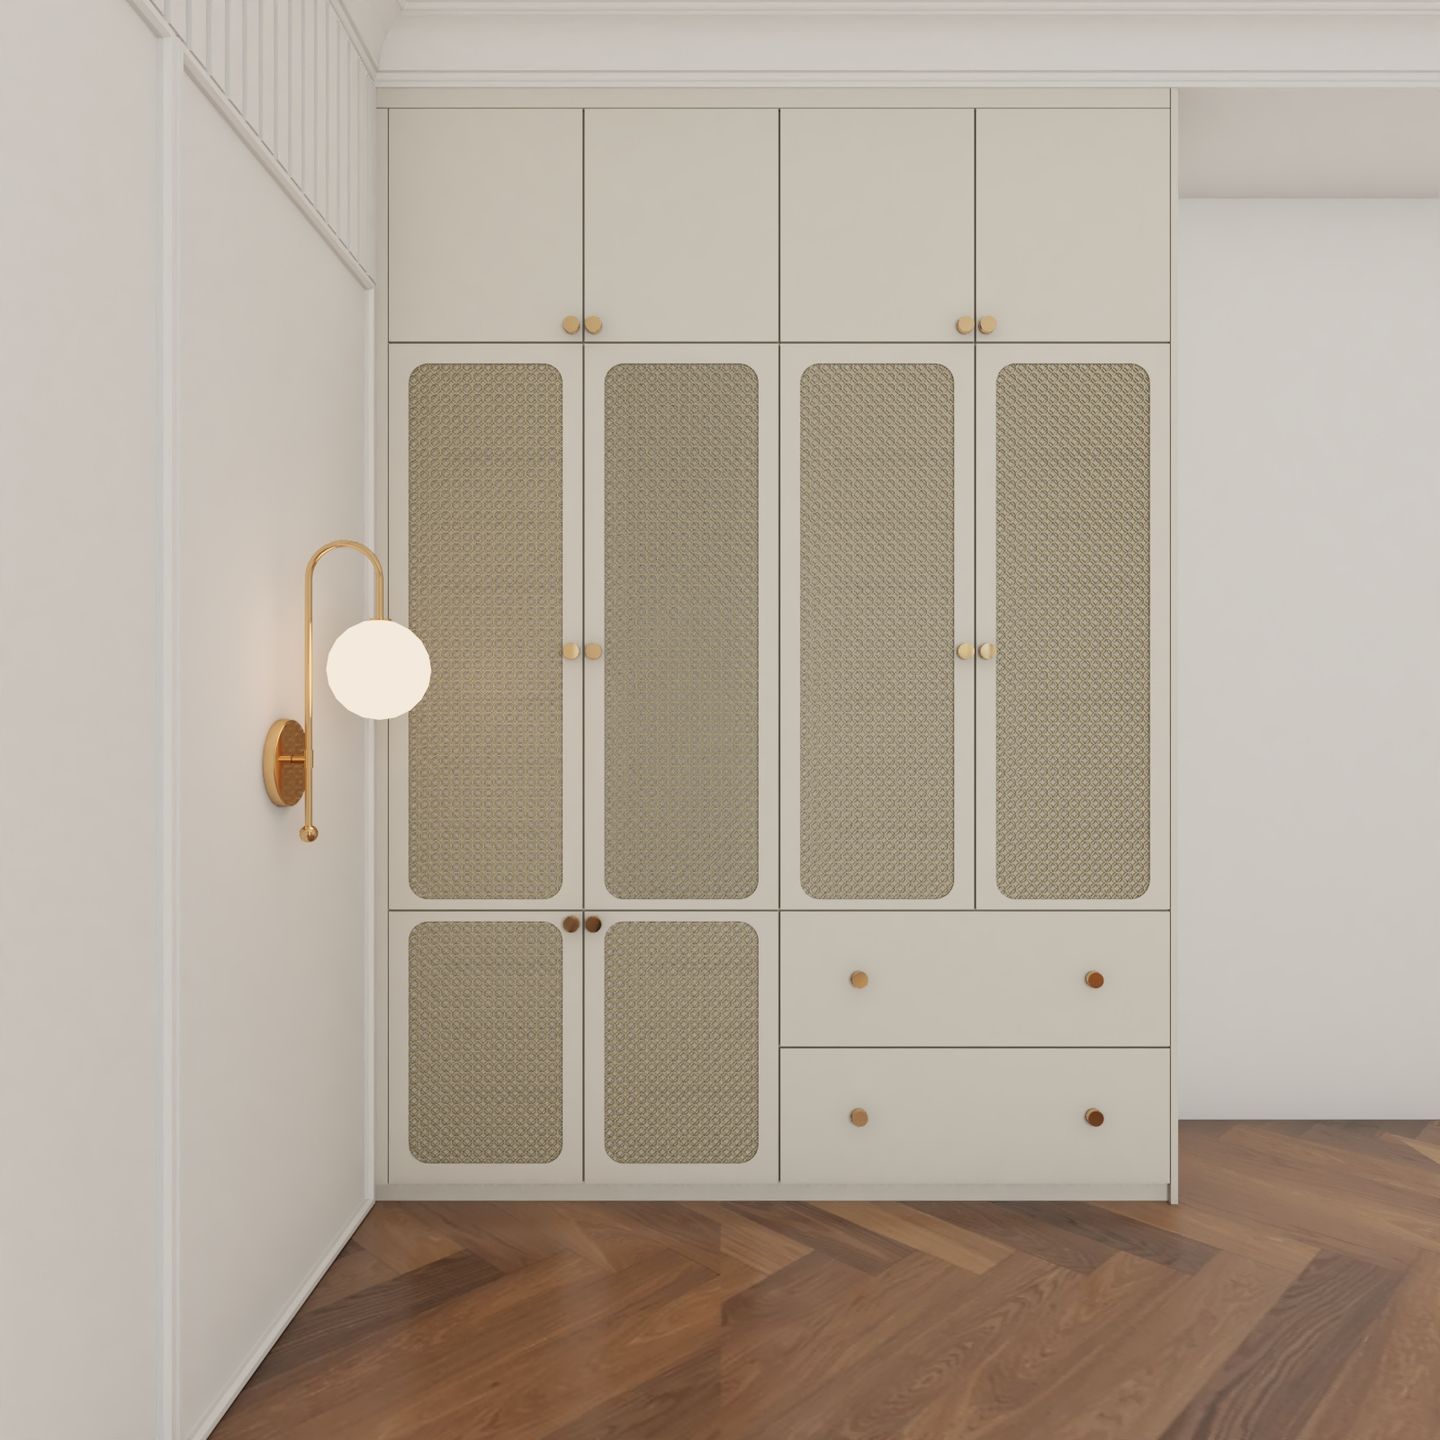 Modern 4 Door Swing Wardrobe Design With Laminate In Suede Finish - Livspace